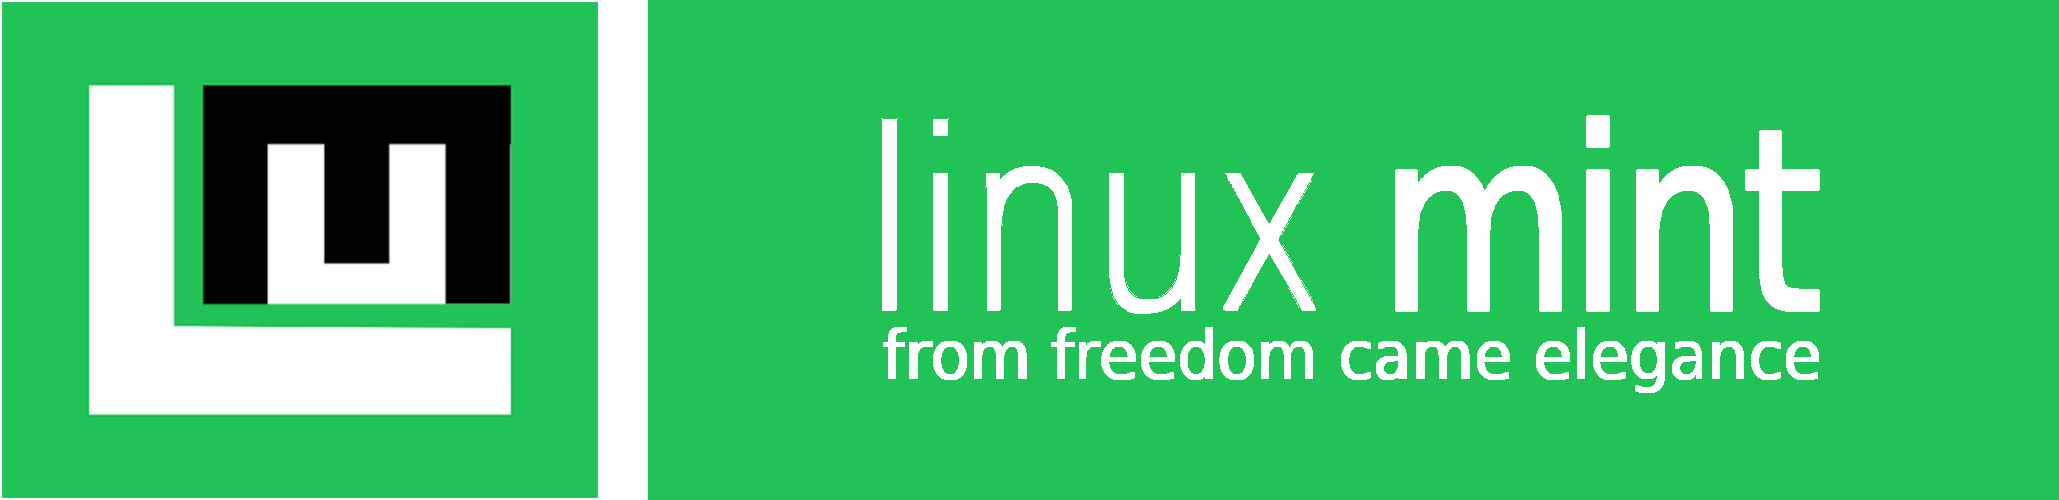 Linux Mint Logo - New modern Linux Mint logo - Linux Mint Forums